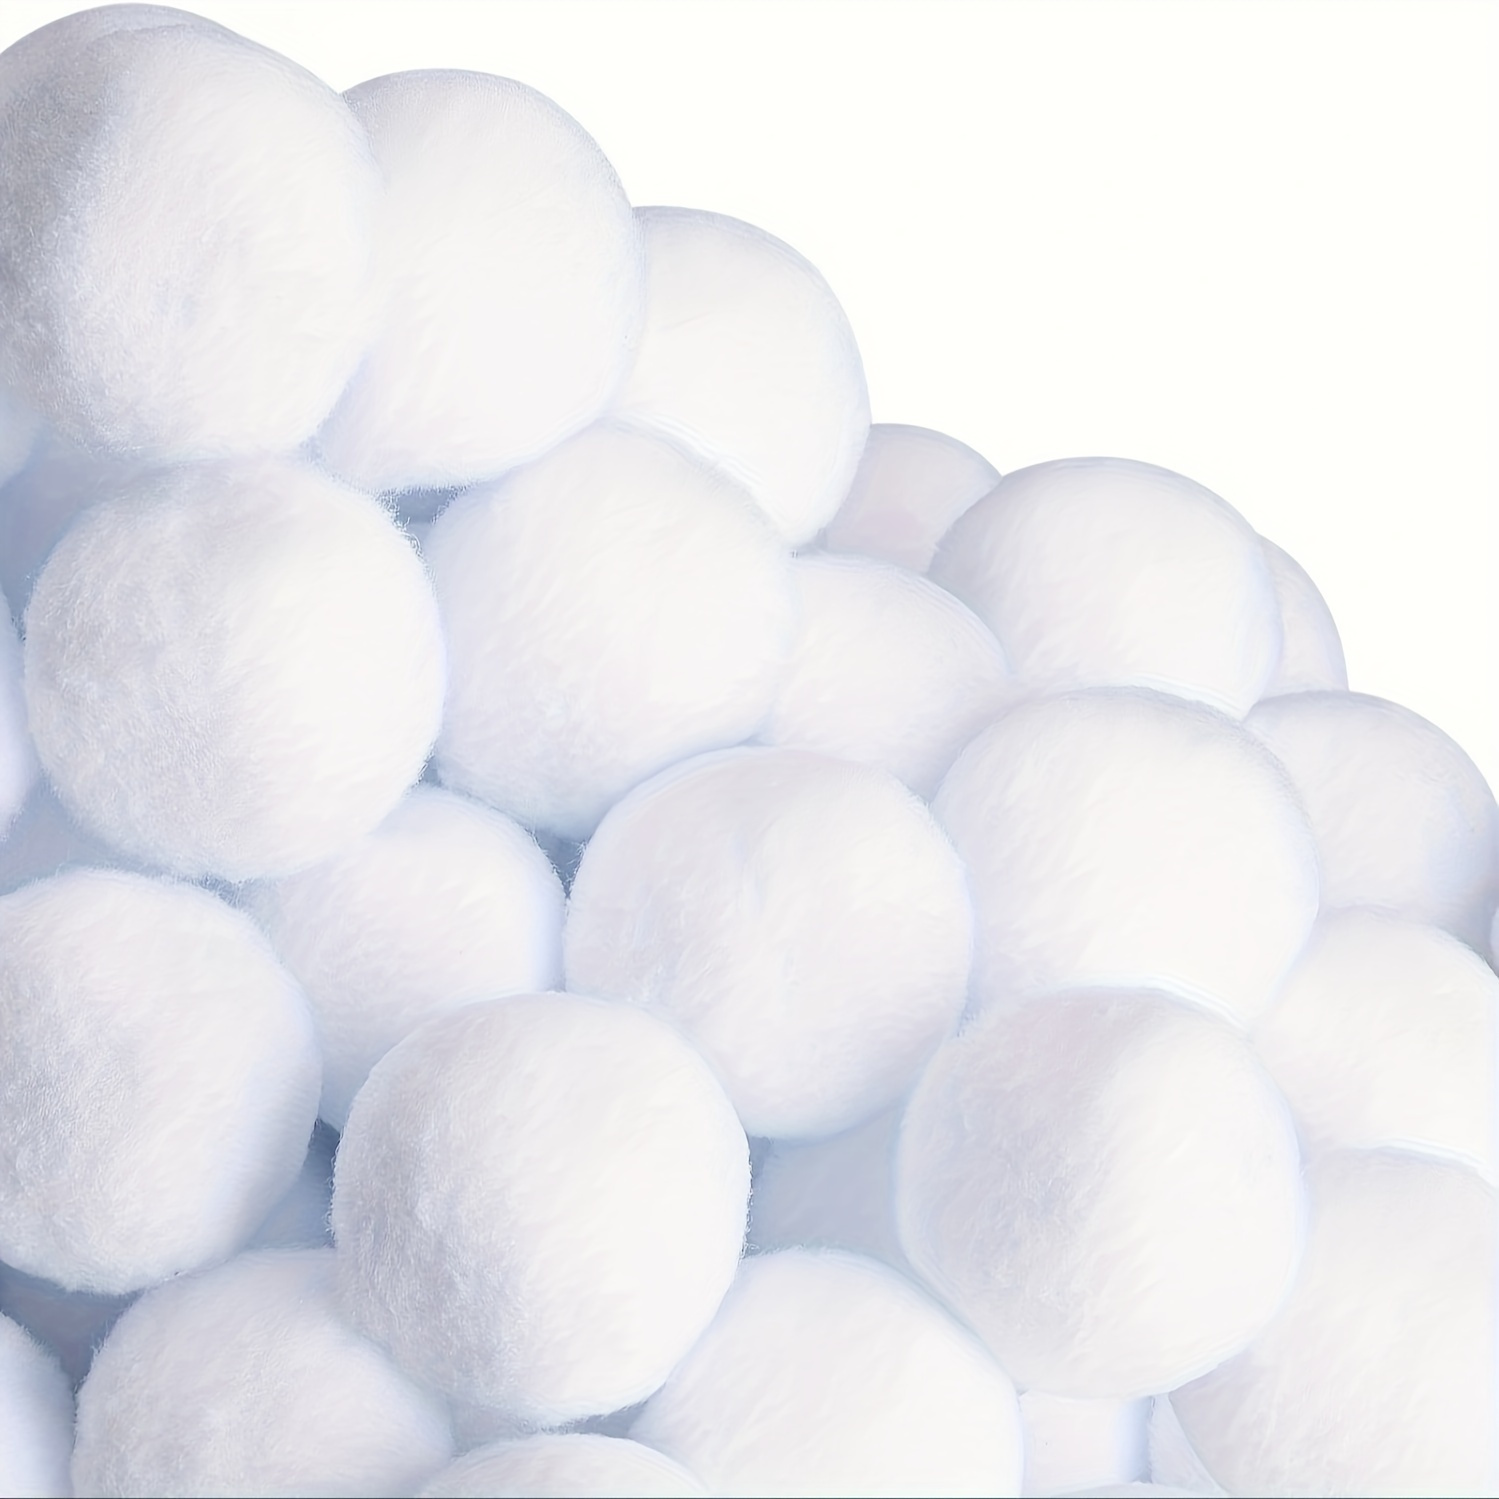 50-PK Fake Snowballs for Kids I Indoor Snowball Fight Set I Artificial  Snowballs for Kids